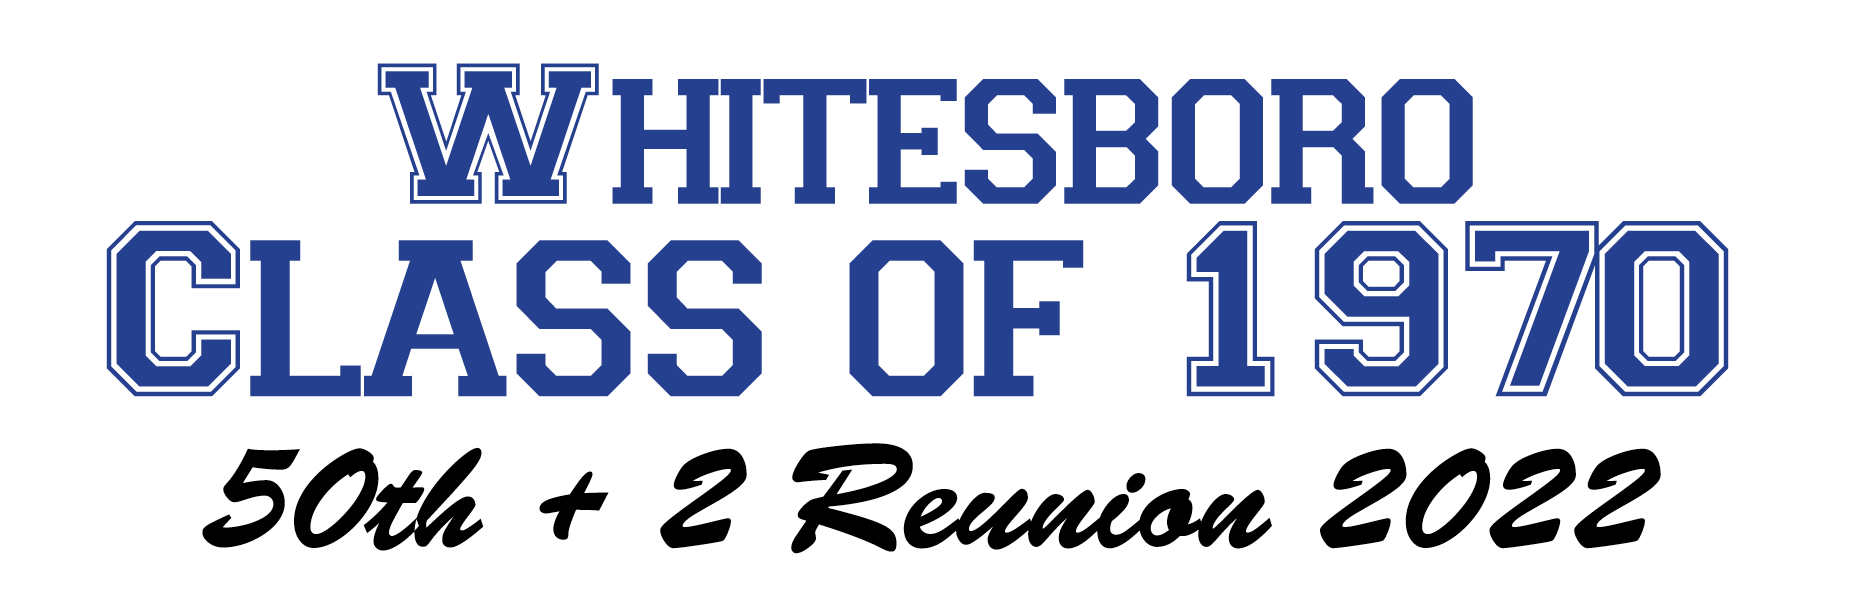 Whitesboro Class of 1970 50th + 1 Reunion